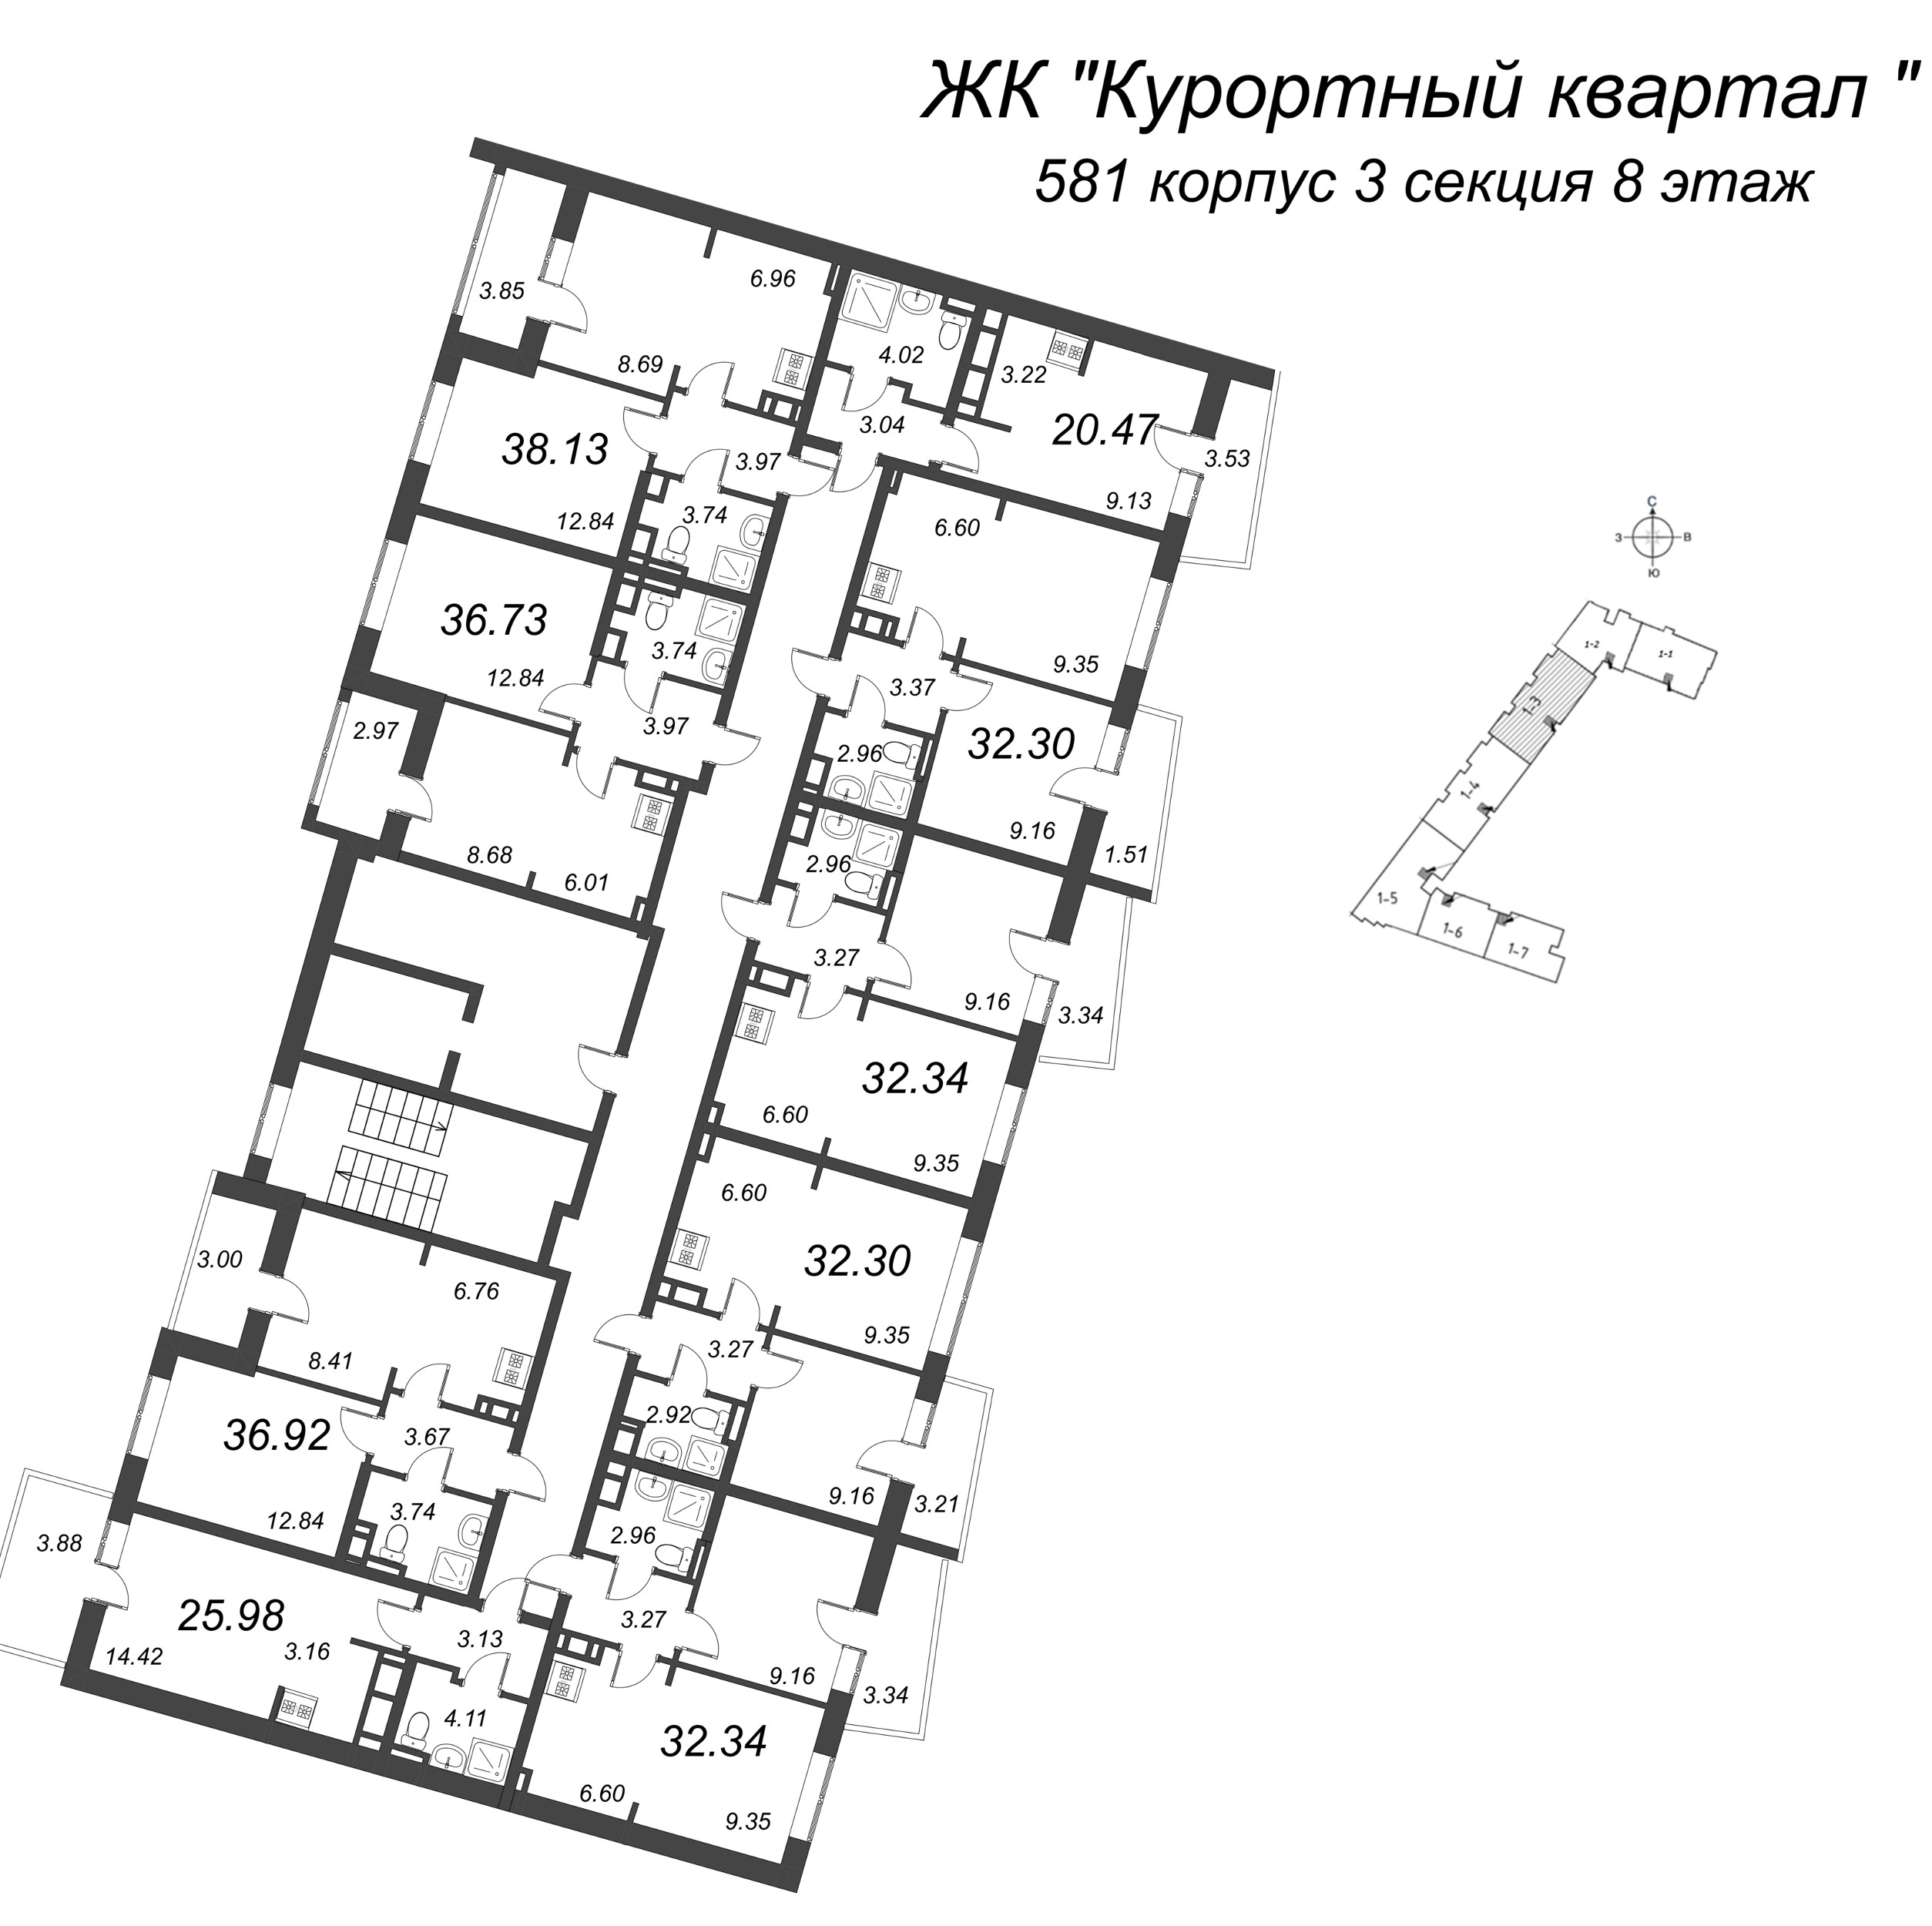 2-комнатная (Евро) квартира, 32.3 м² - планировка этажа